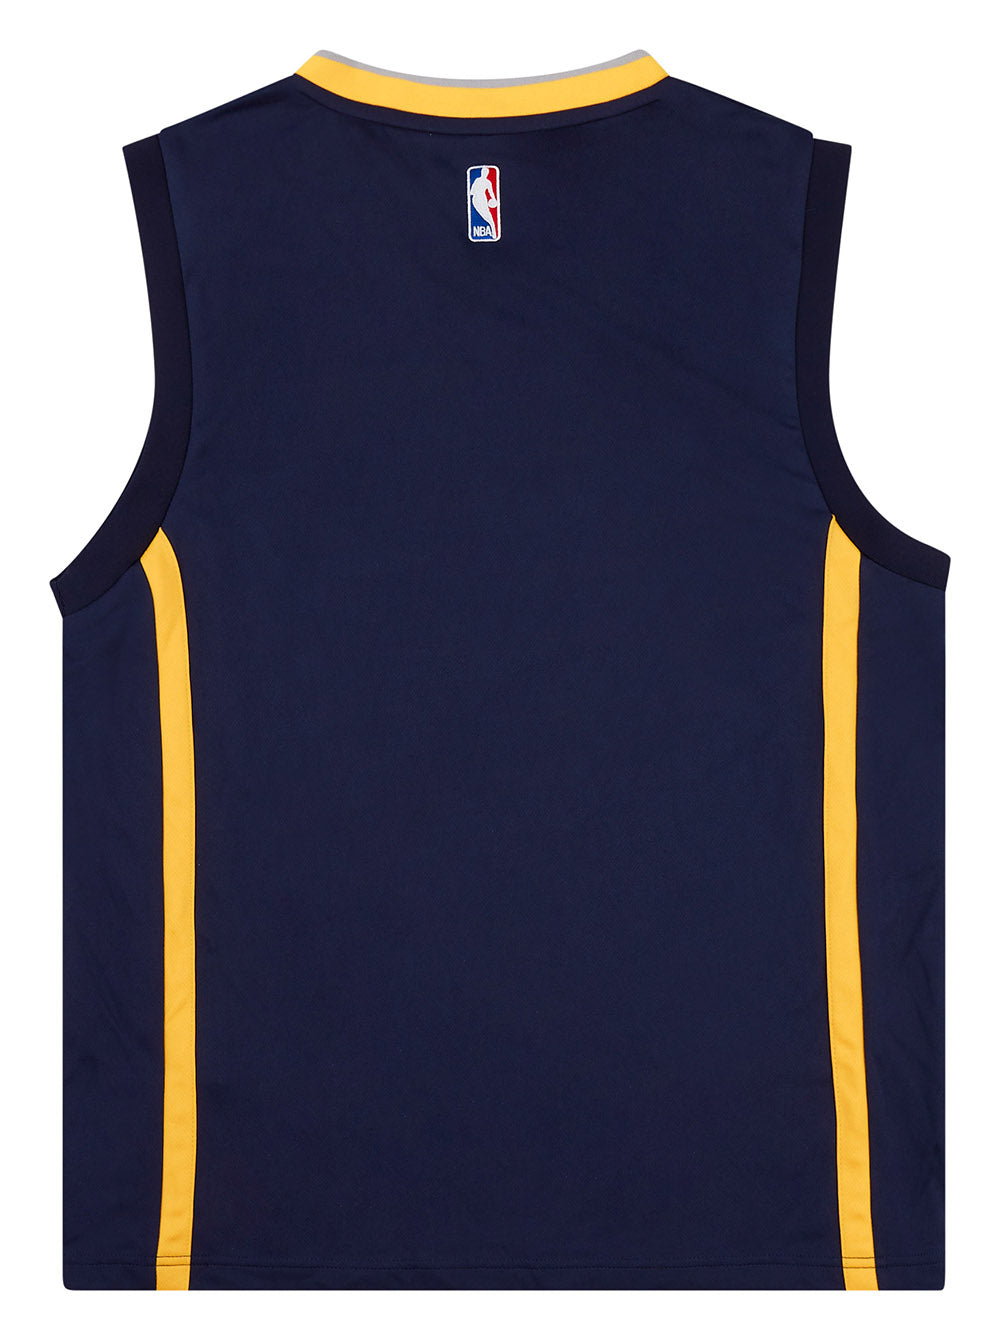 Golden State Warriors NBA Adidas White Men's Swingman Blank Jersey